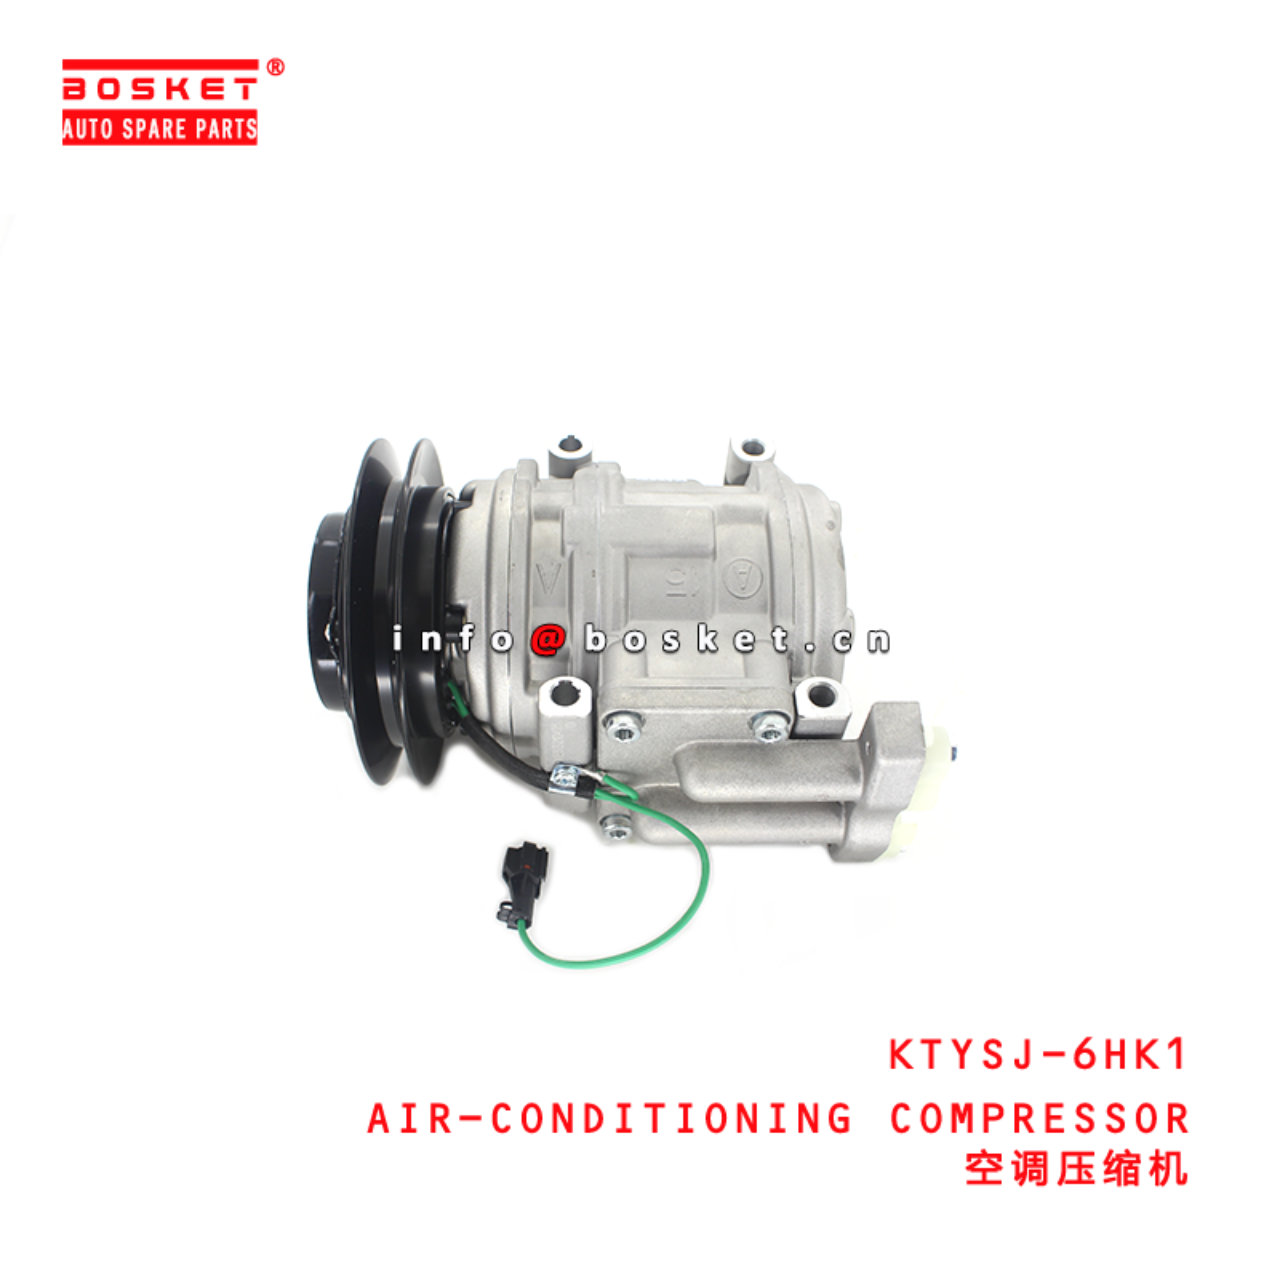 KTYSJ-6HK1 Air-Conditioning Compressor Suitable for ISUZU 6HK1